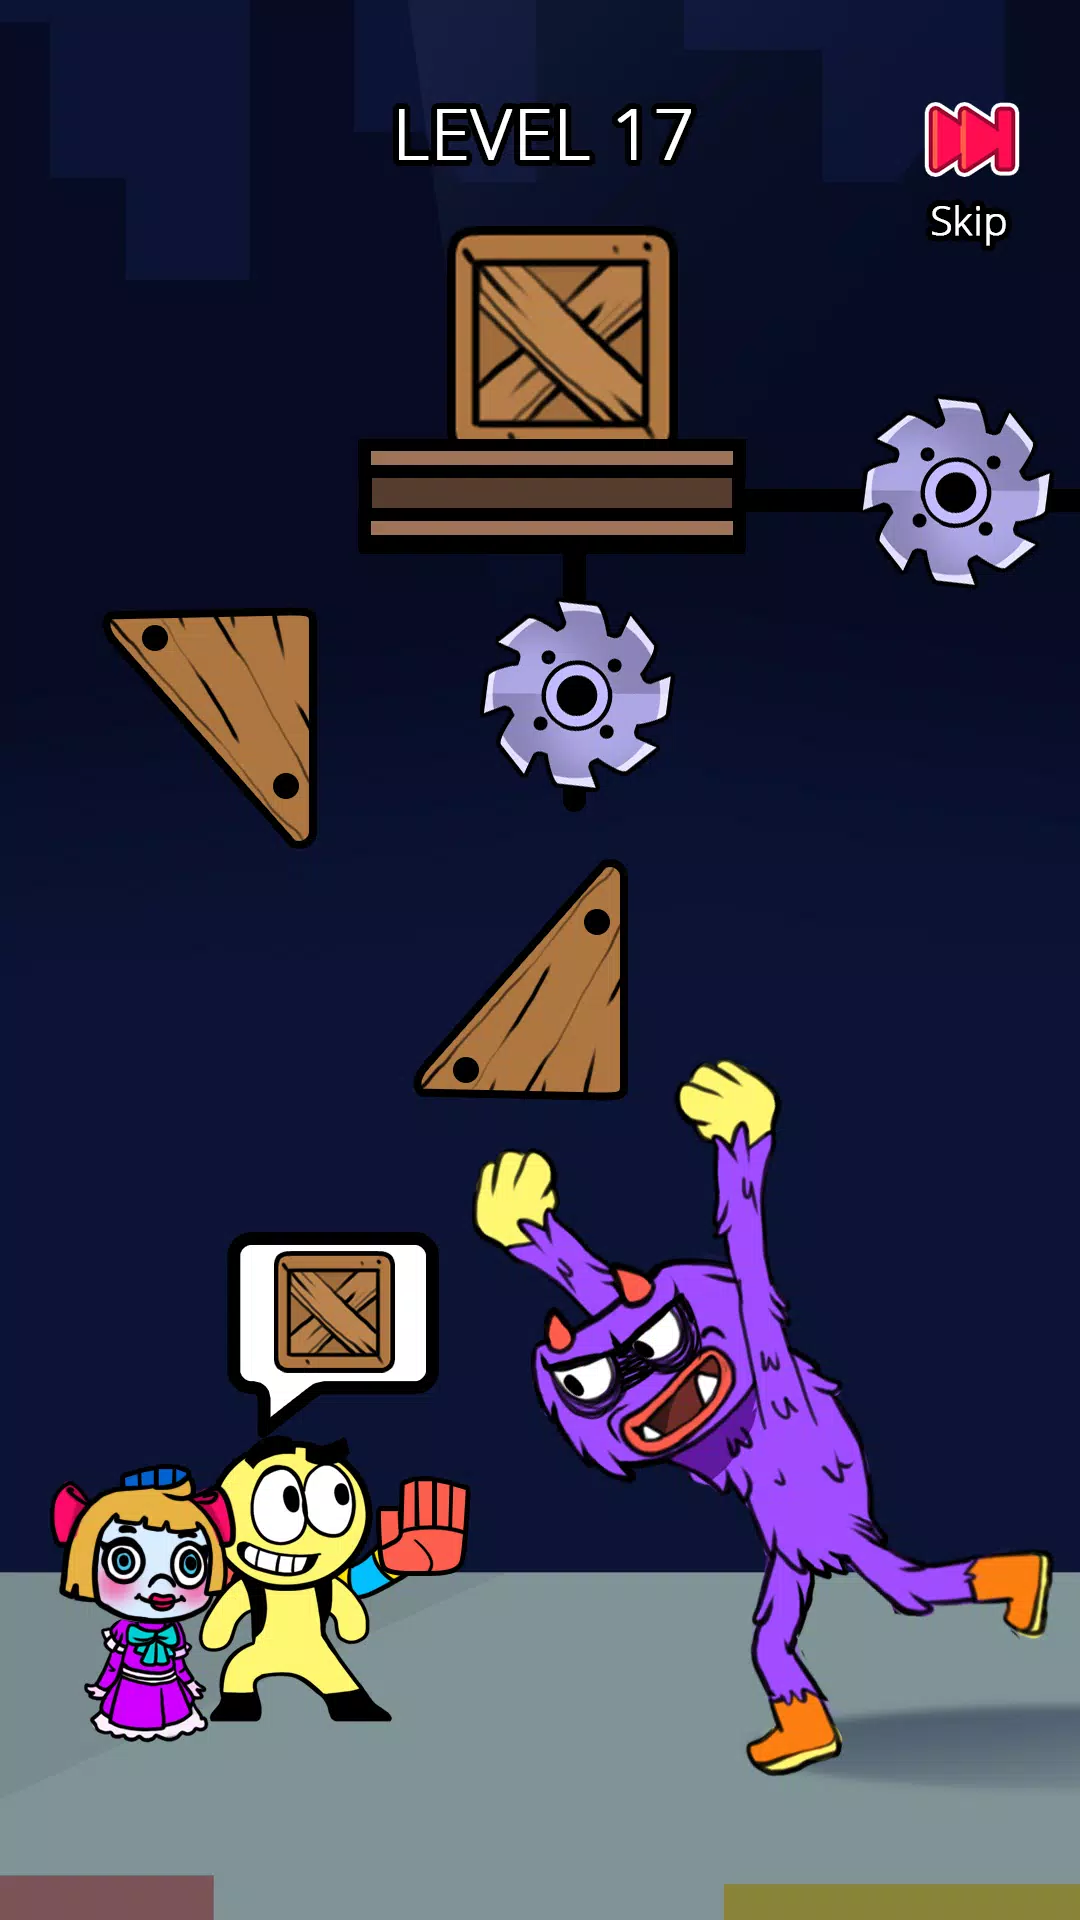 GrabPack Playtime Blue Monster APK for Android Download